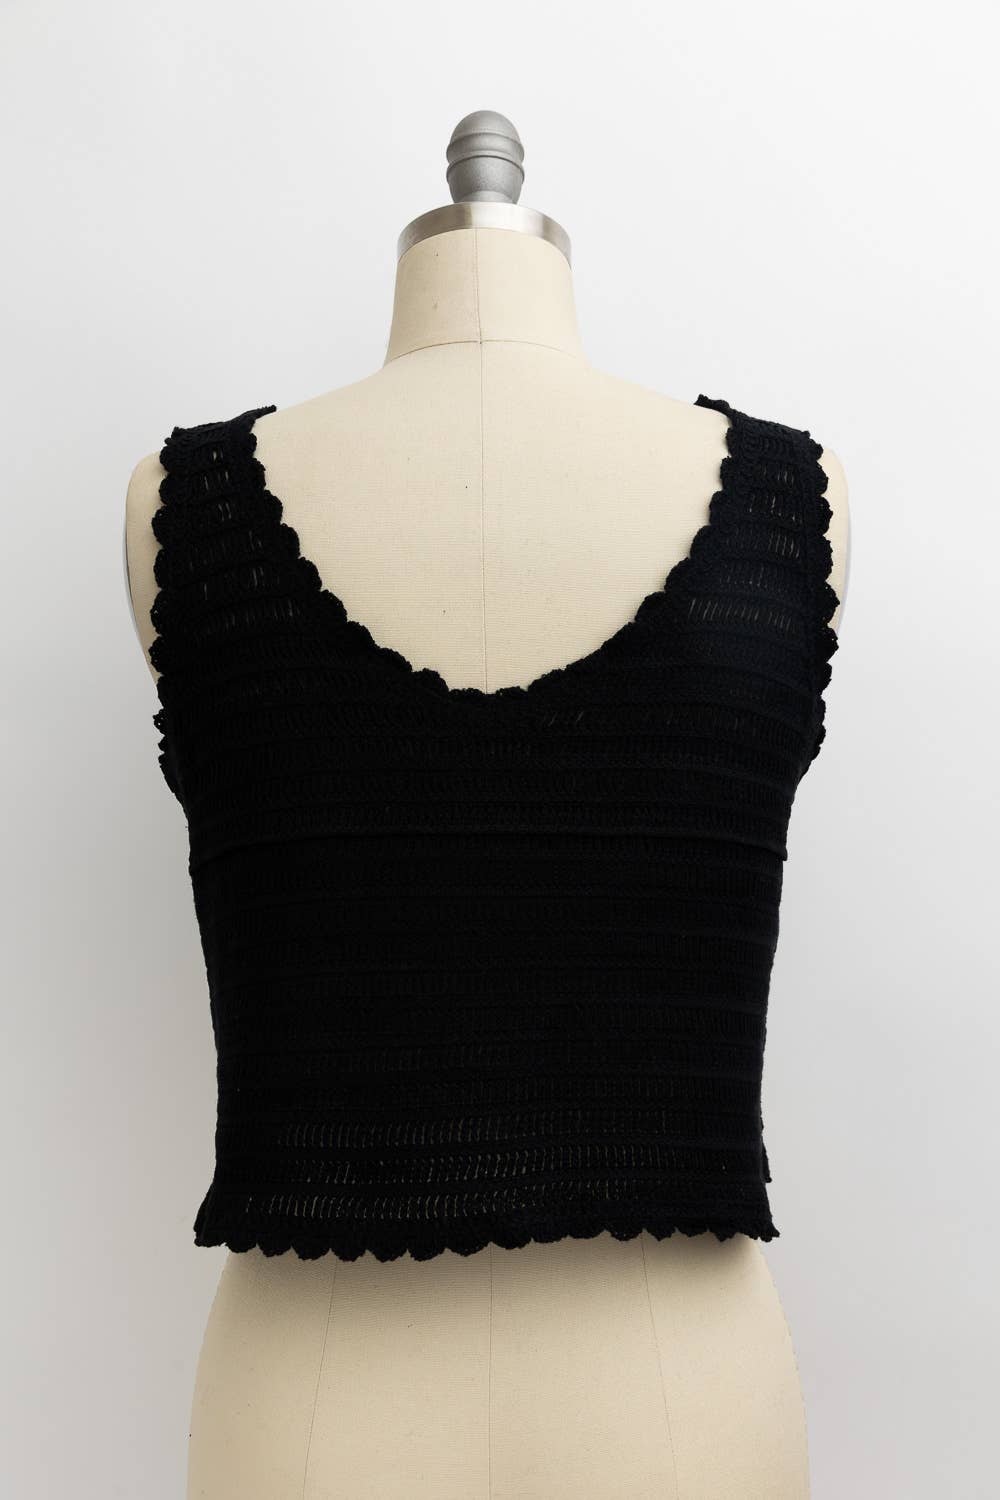 crochet style black boho tank top back side